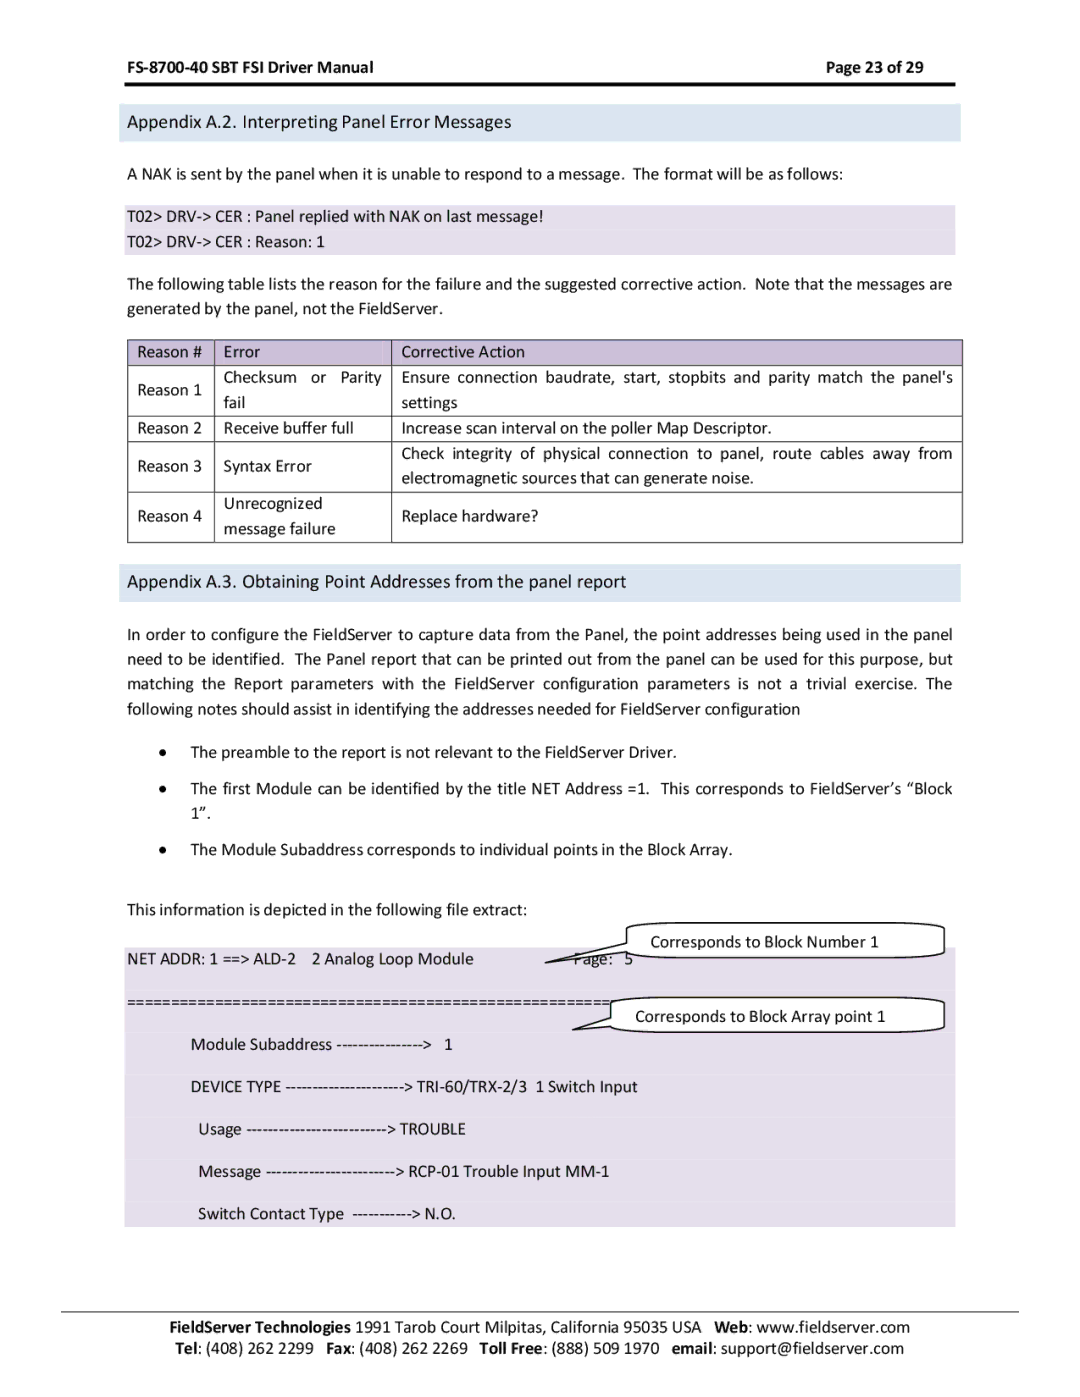 FieldServer FS-8700-40 instruction manual Appendix A.2. Interpreting Panel Error Messages, Trouble 